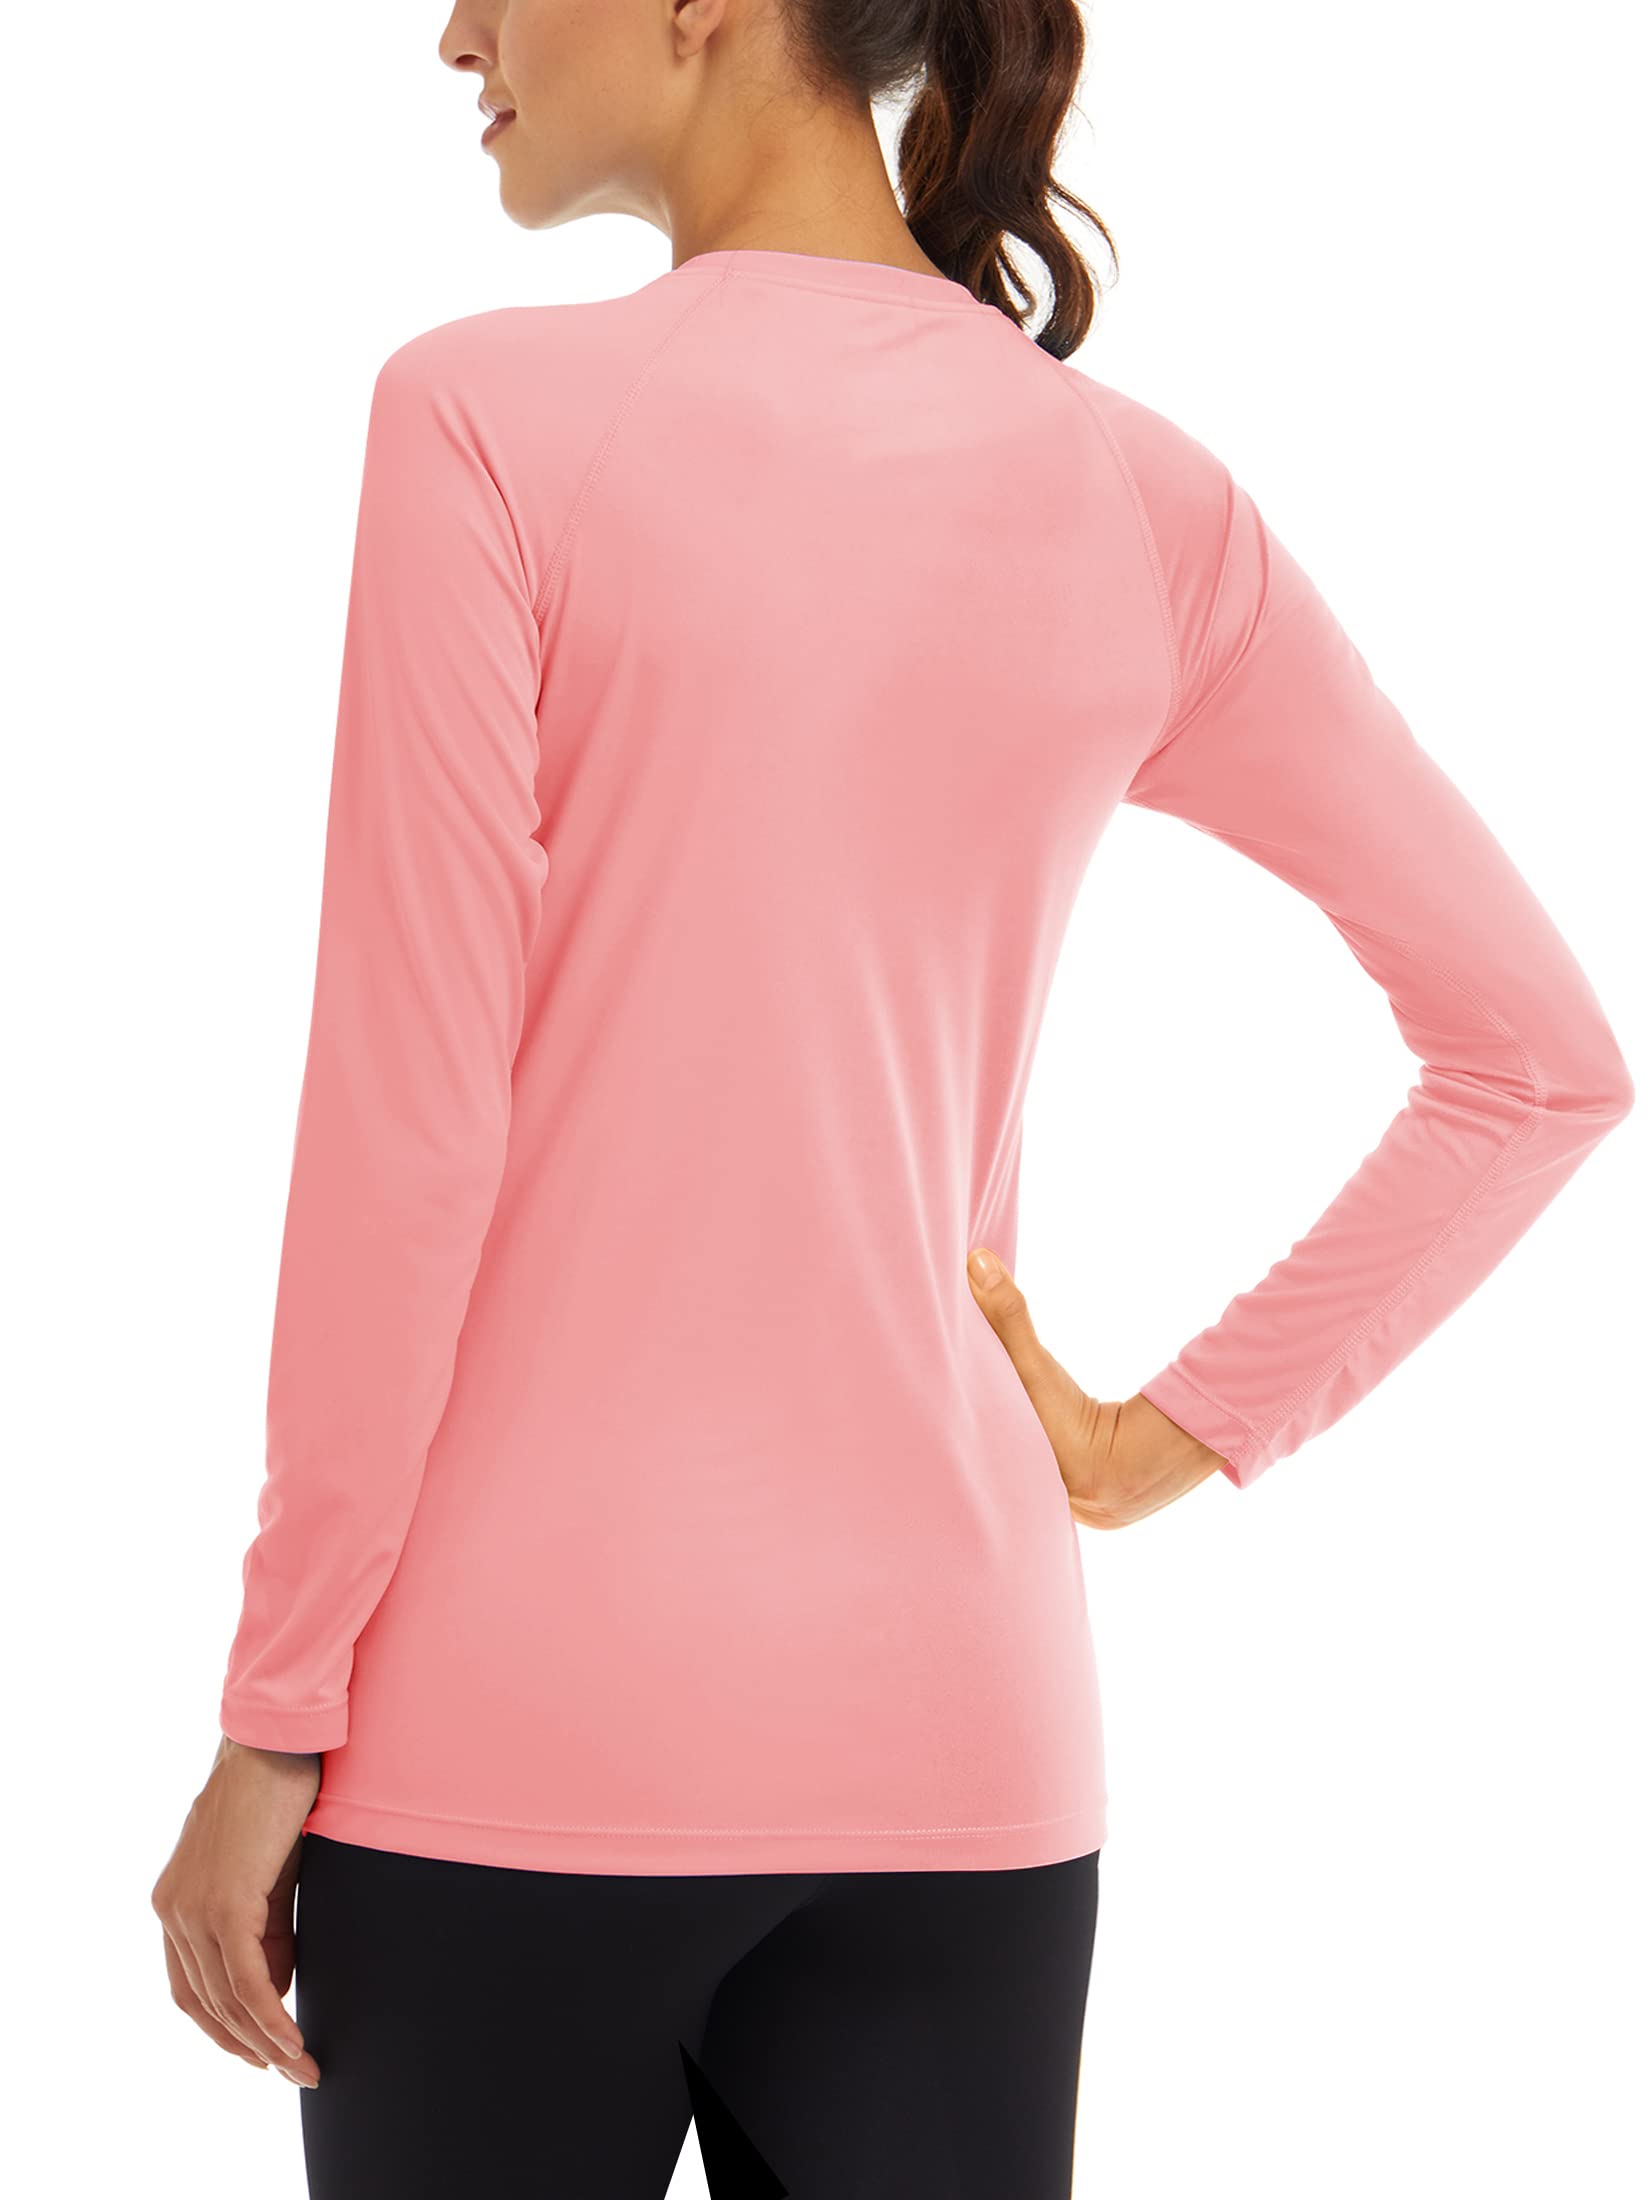 TACVASEN Women's Sun Protection Shirt UPF 50+ Long Sleeve Hiking Running Sport Workout Rash Guards Tops